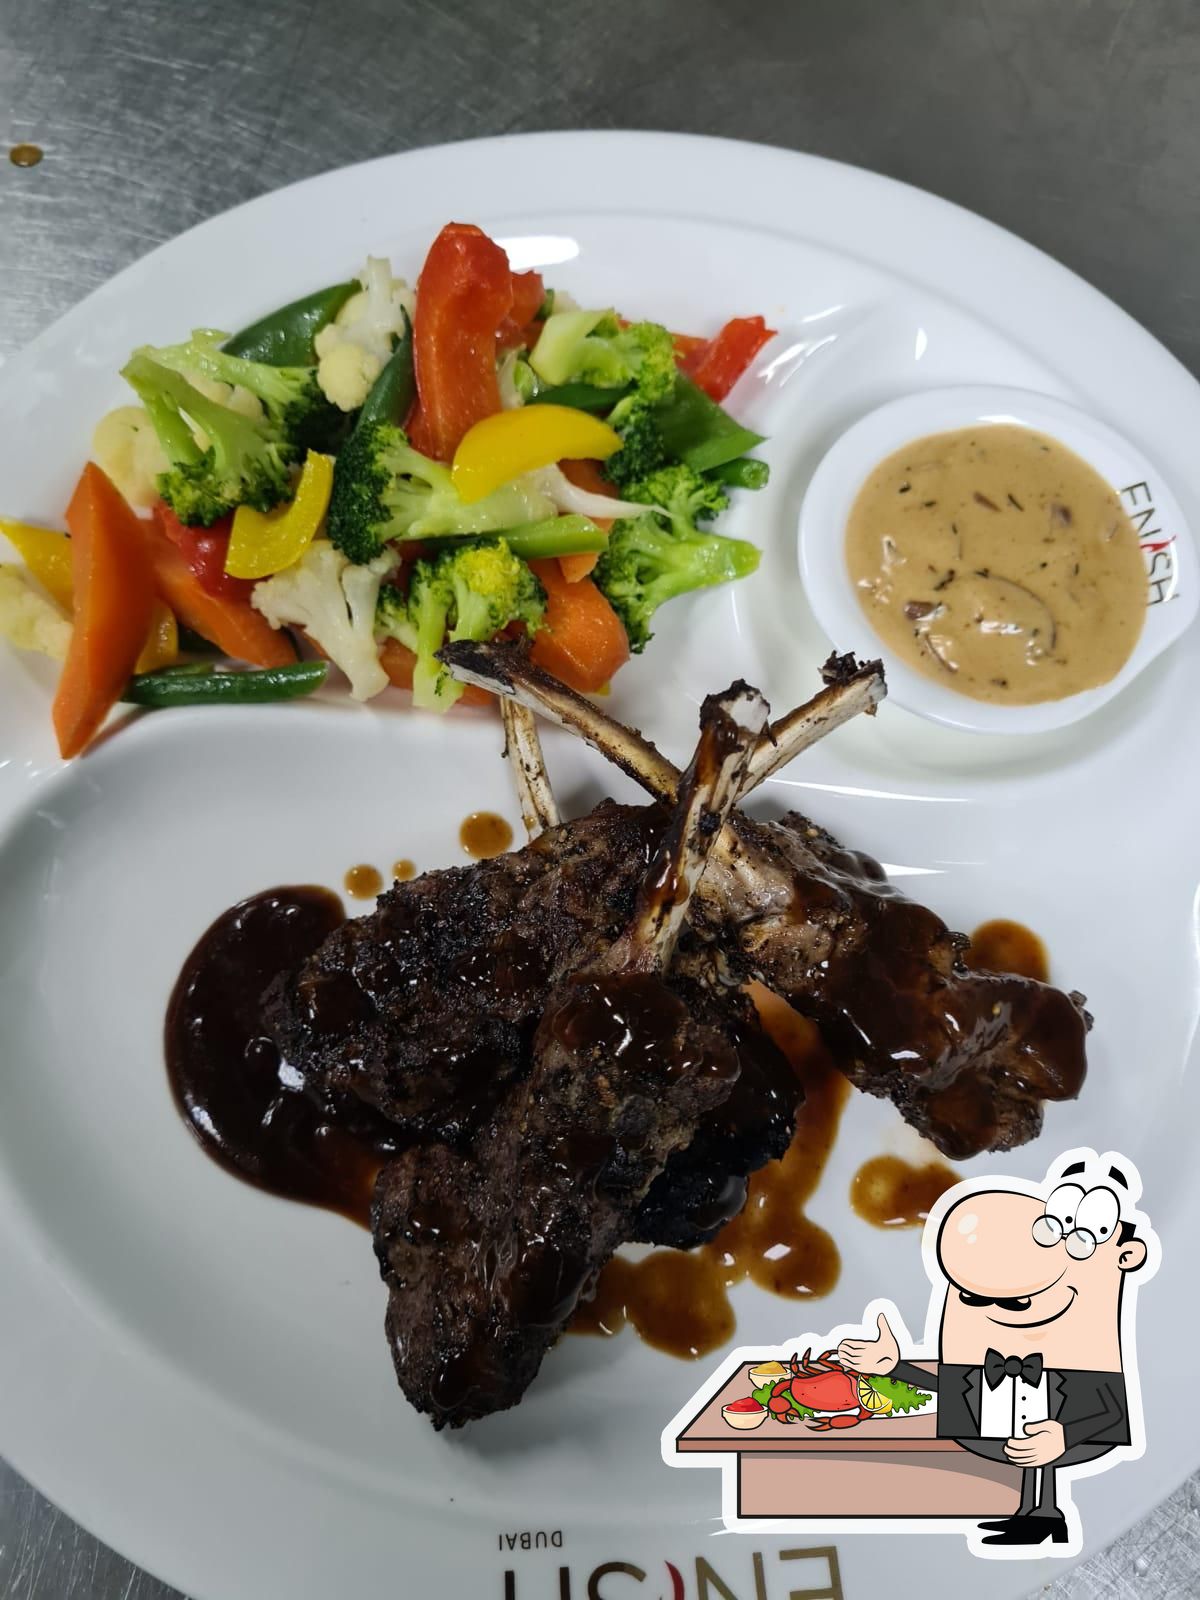 Garnished Stockfish - Picture of Enish Nigerian Restaurant & Lounge Dubai -  Tripadvisor